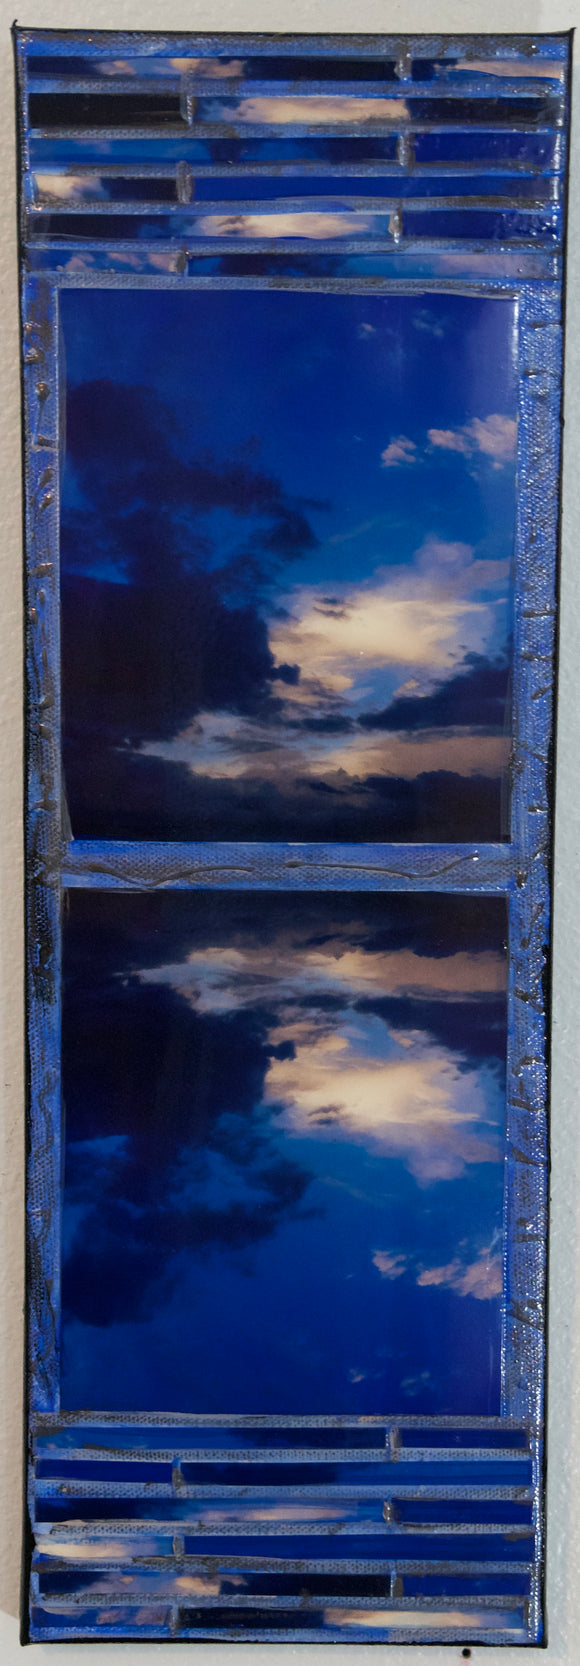 Reflection Blue Monsoon Sky, 6 x 18 x .875